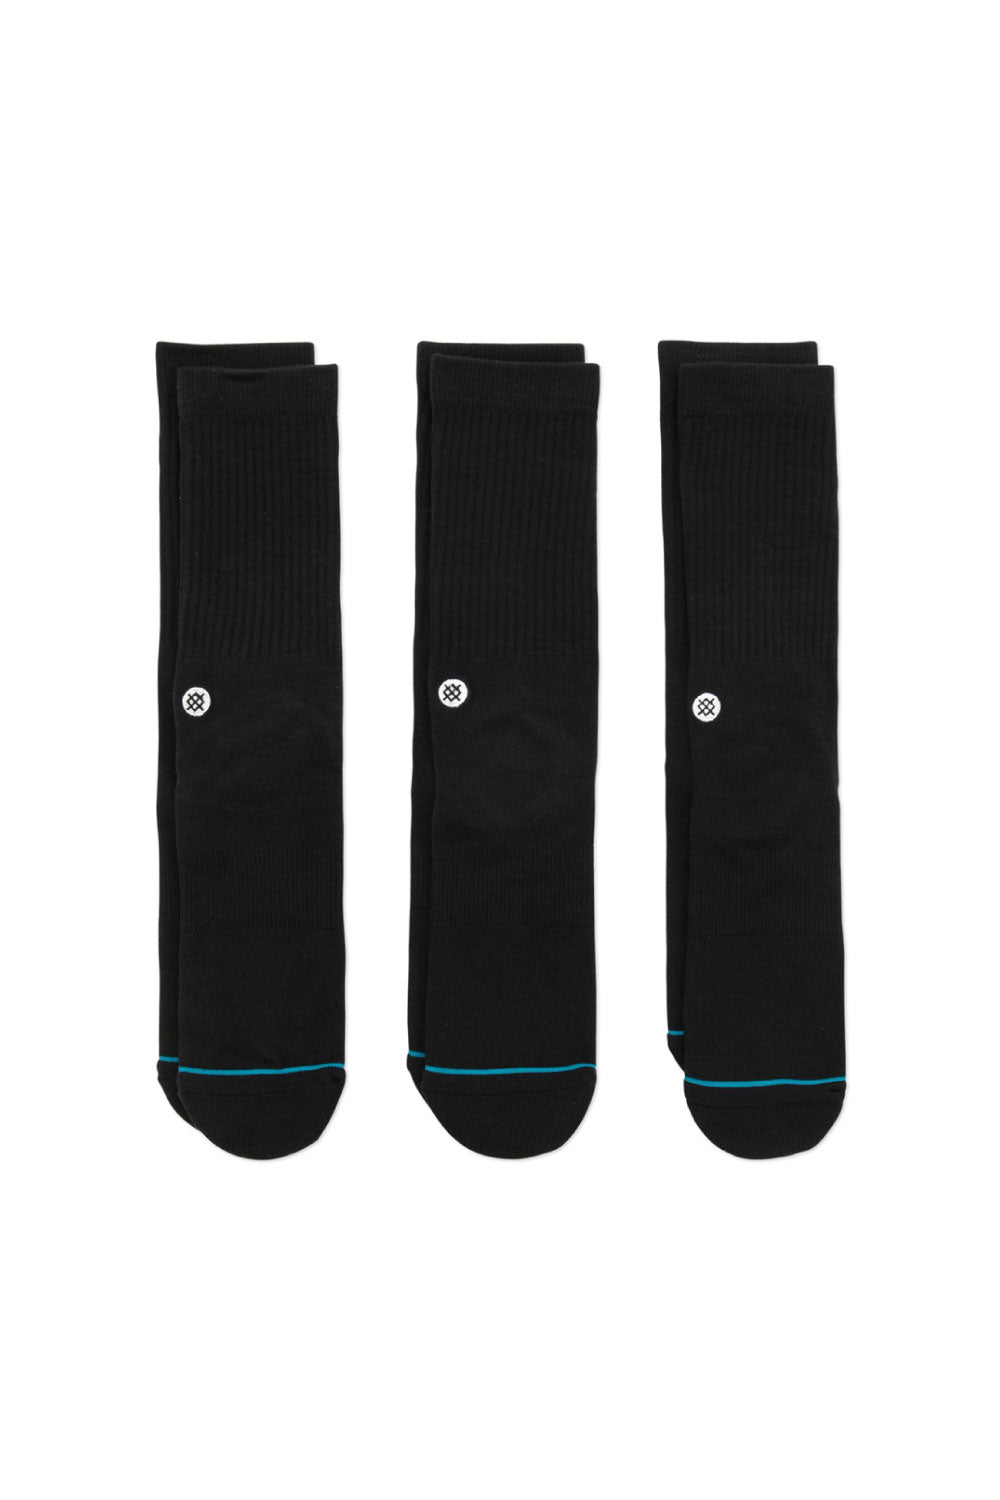 Stance 'ICON' 3 Pack Adult Socks - Black